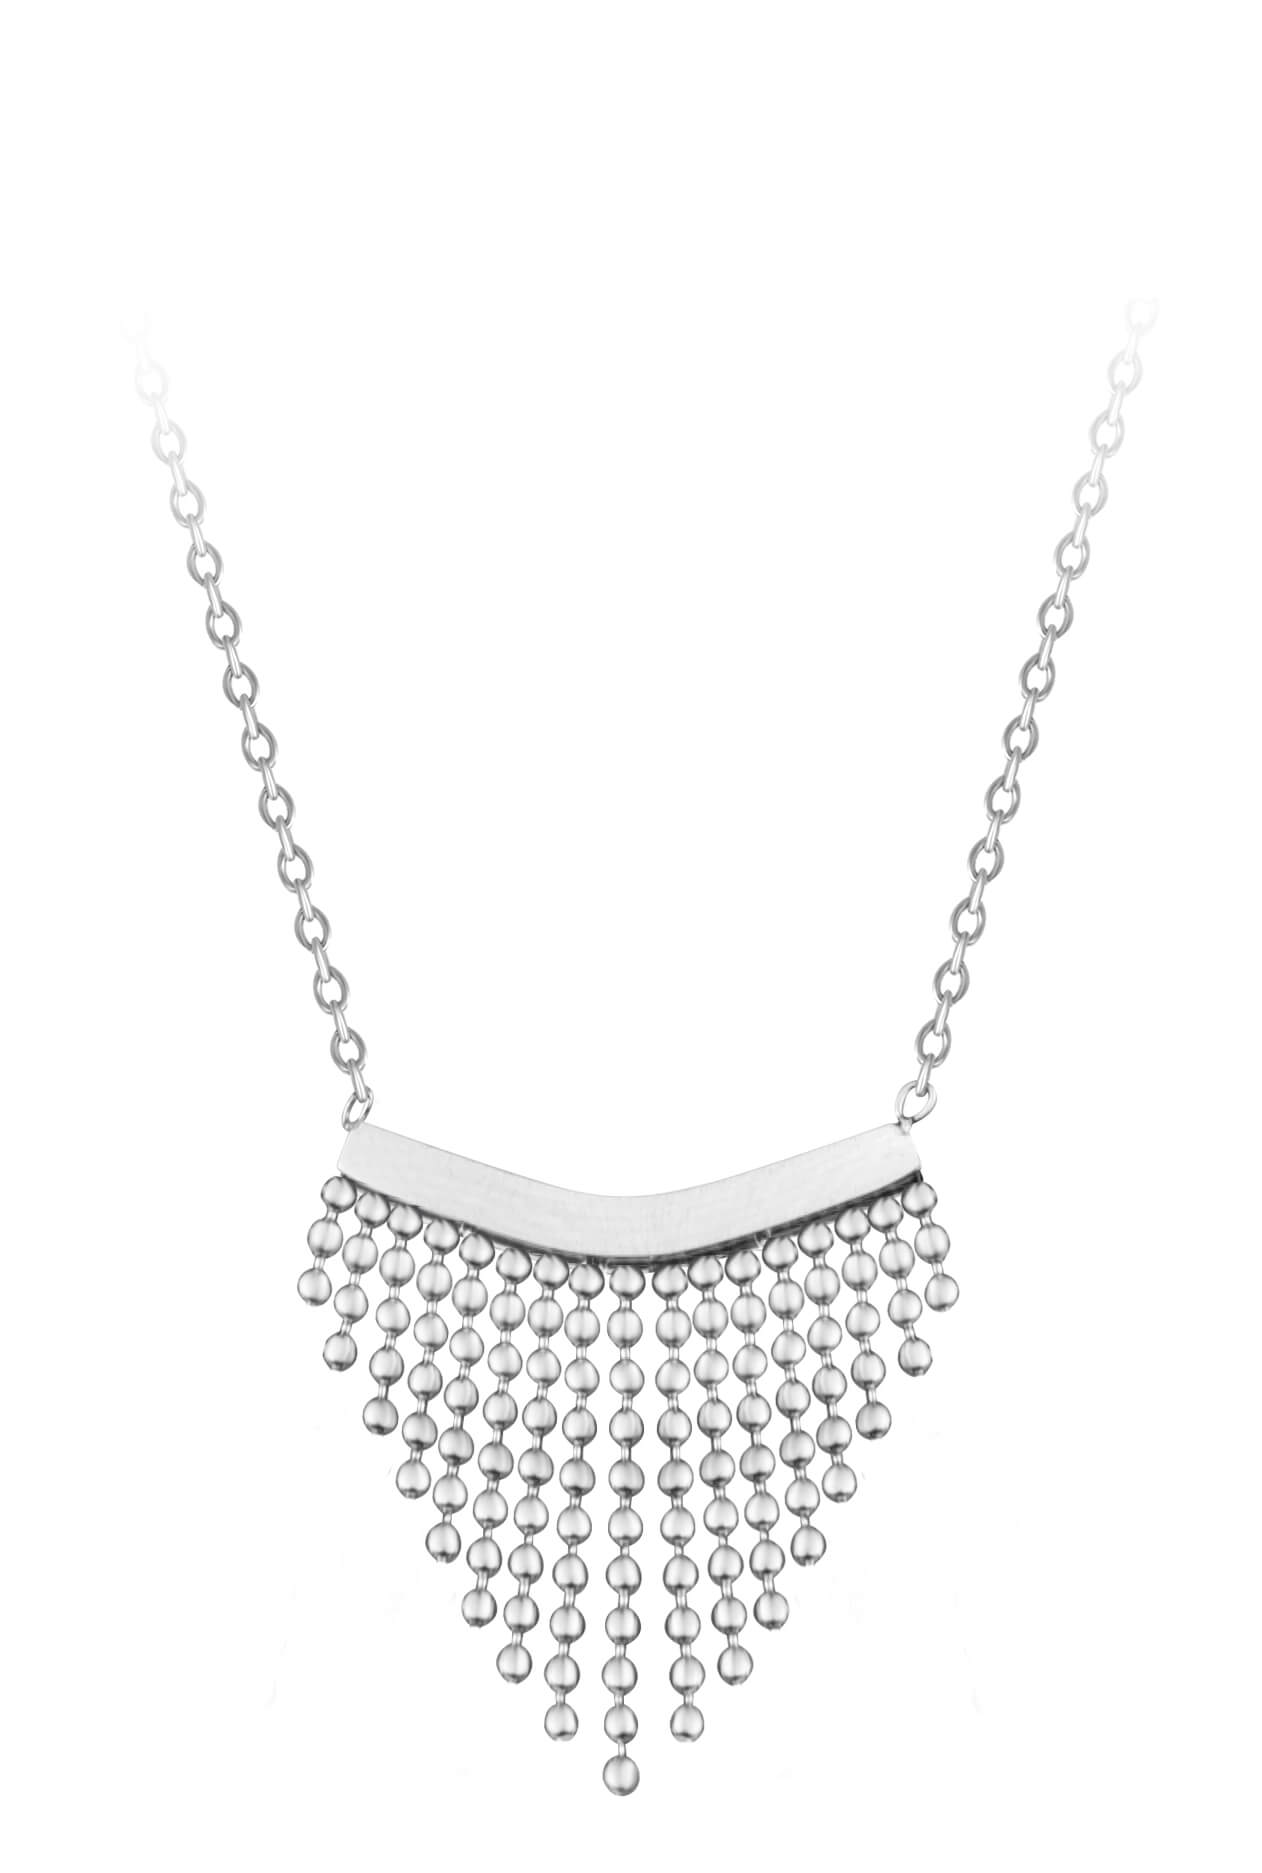 Troli Moderné oceľový náhrdelník s ozdobou Chains Silver